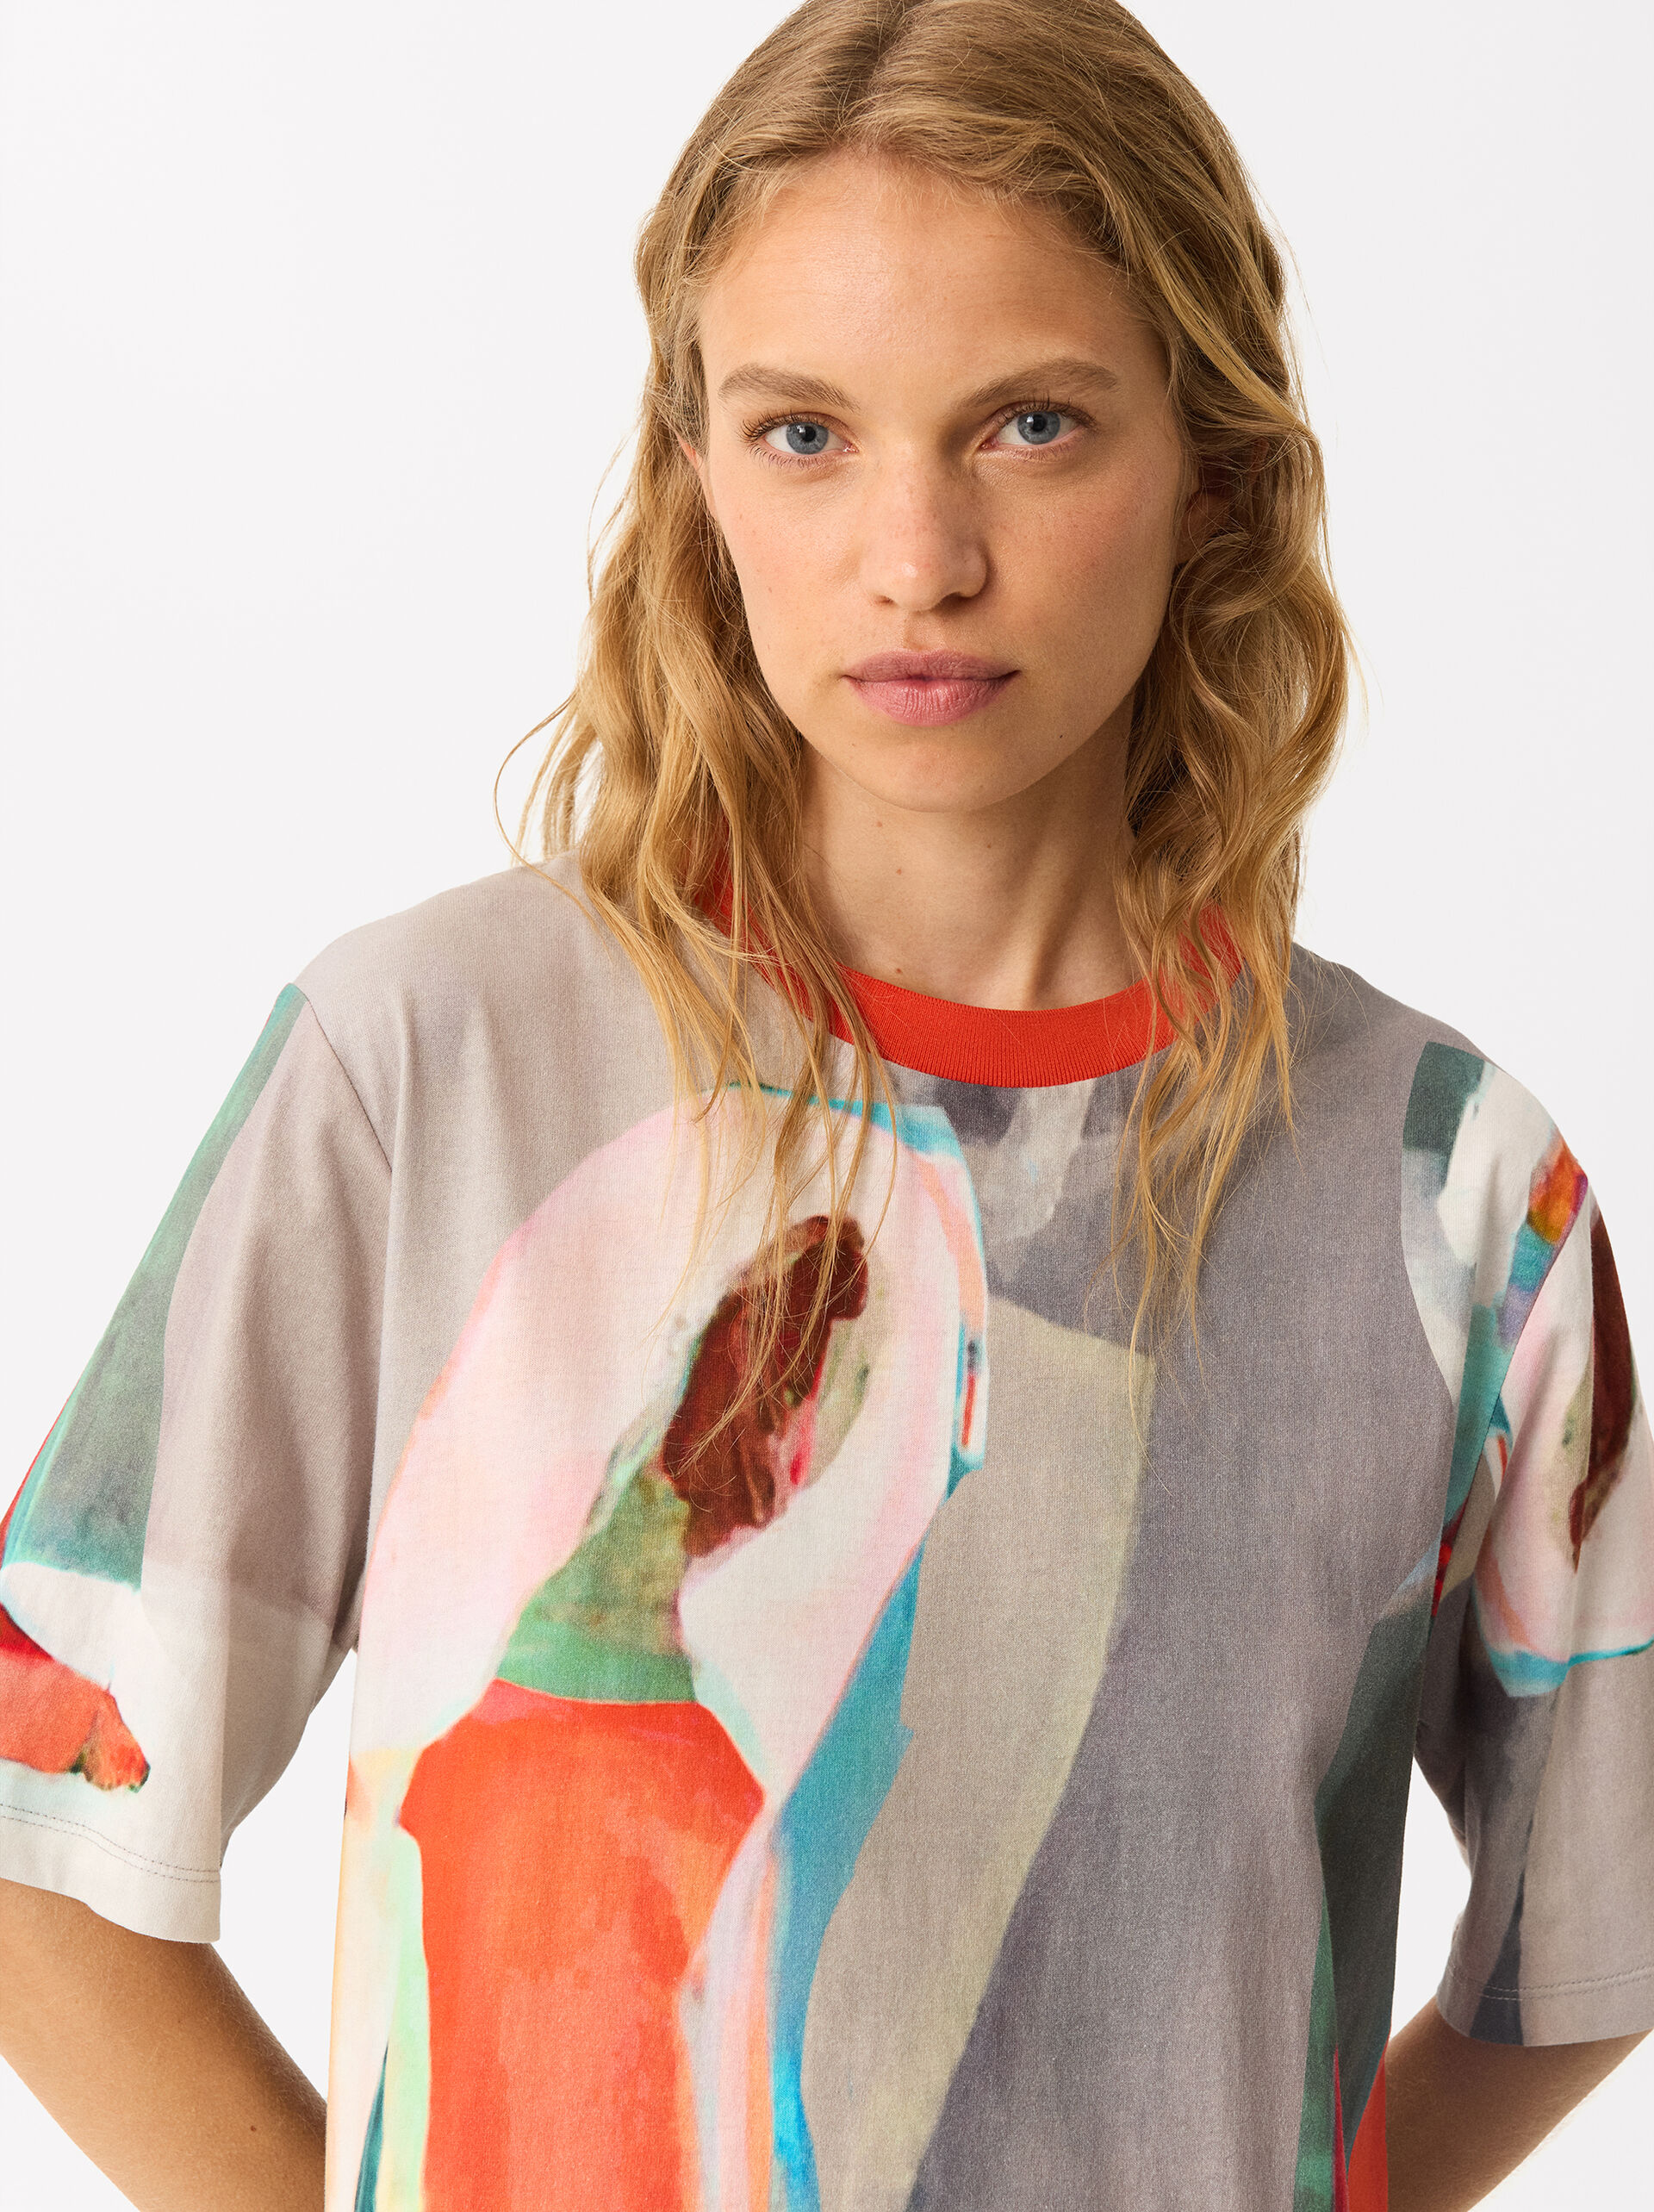 Online Exclusive - Kleid Aus Bedruckter Baumwolle image number 1.0